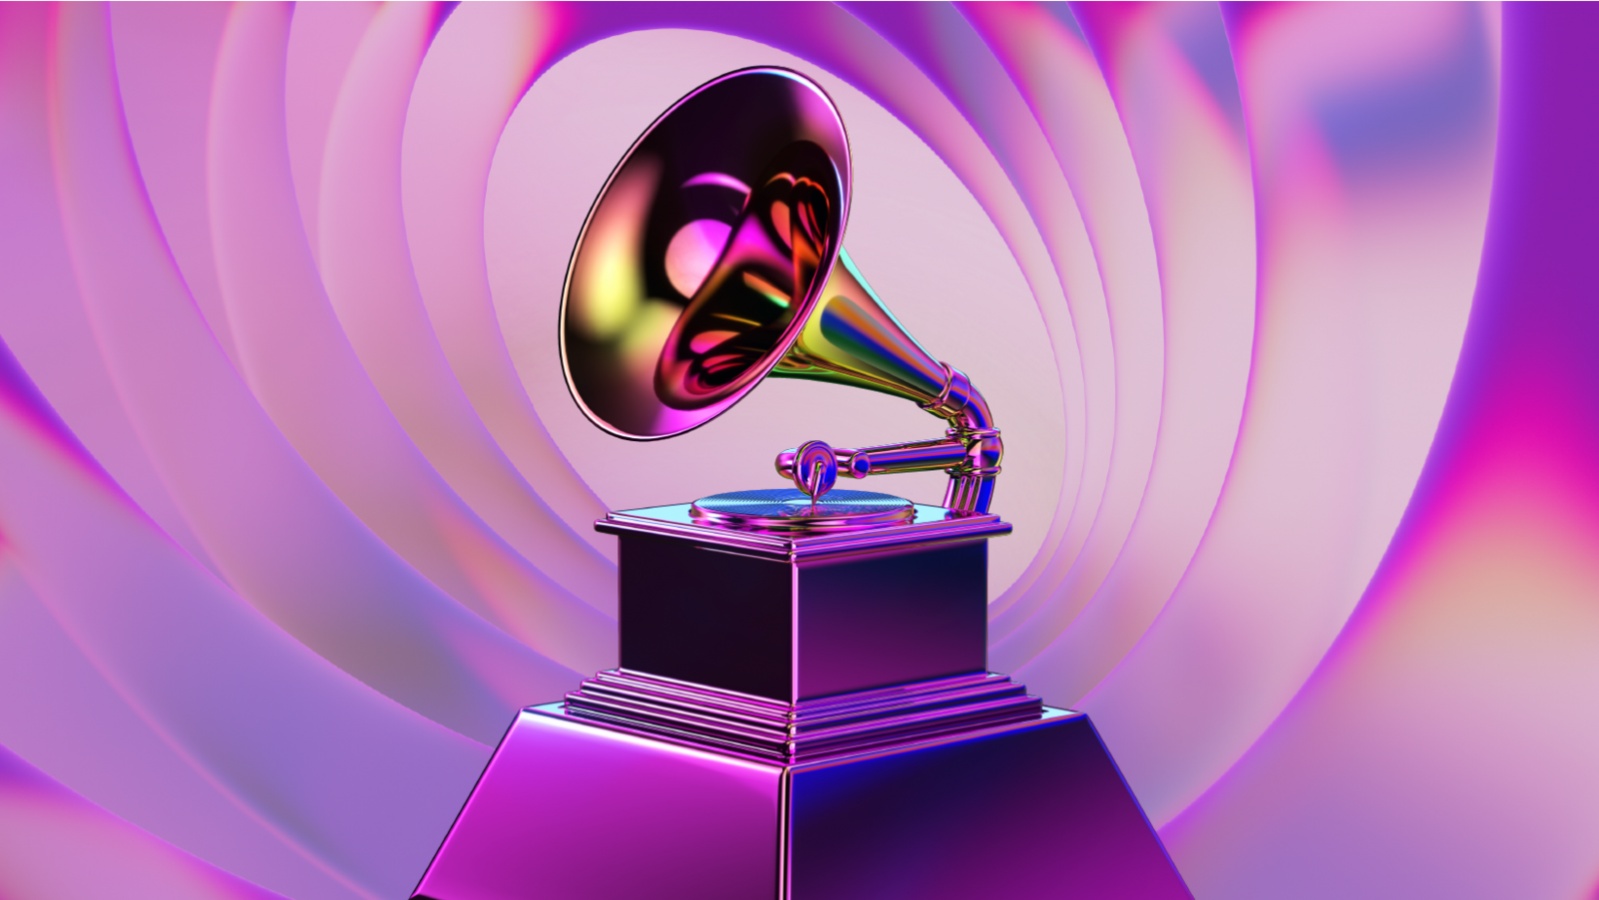 Grammys 2022: Performers to include BTS, Billie Eilish 